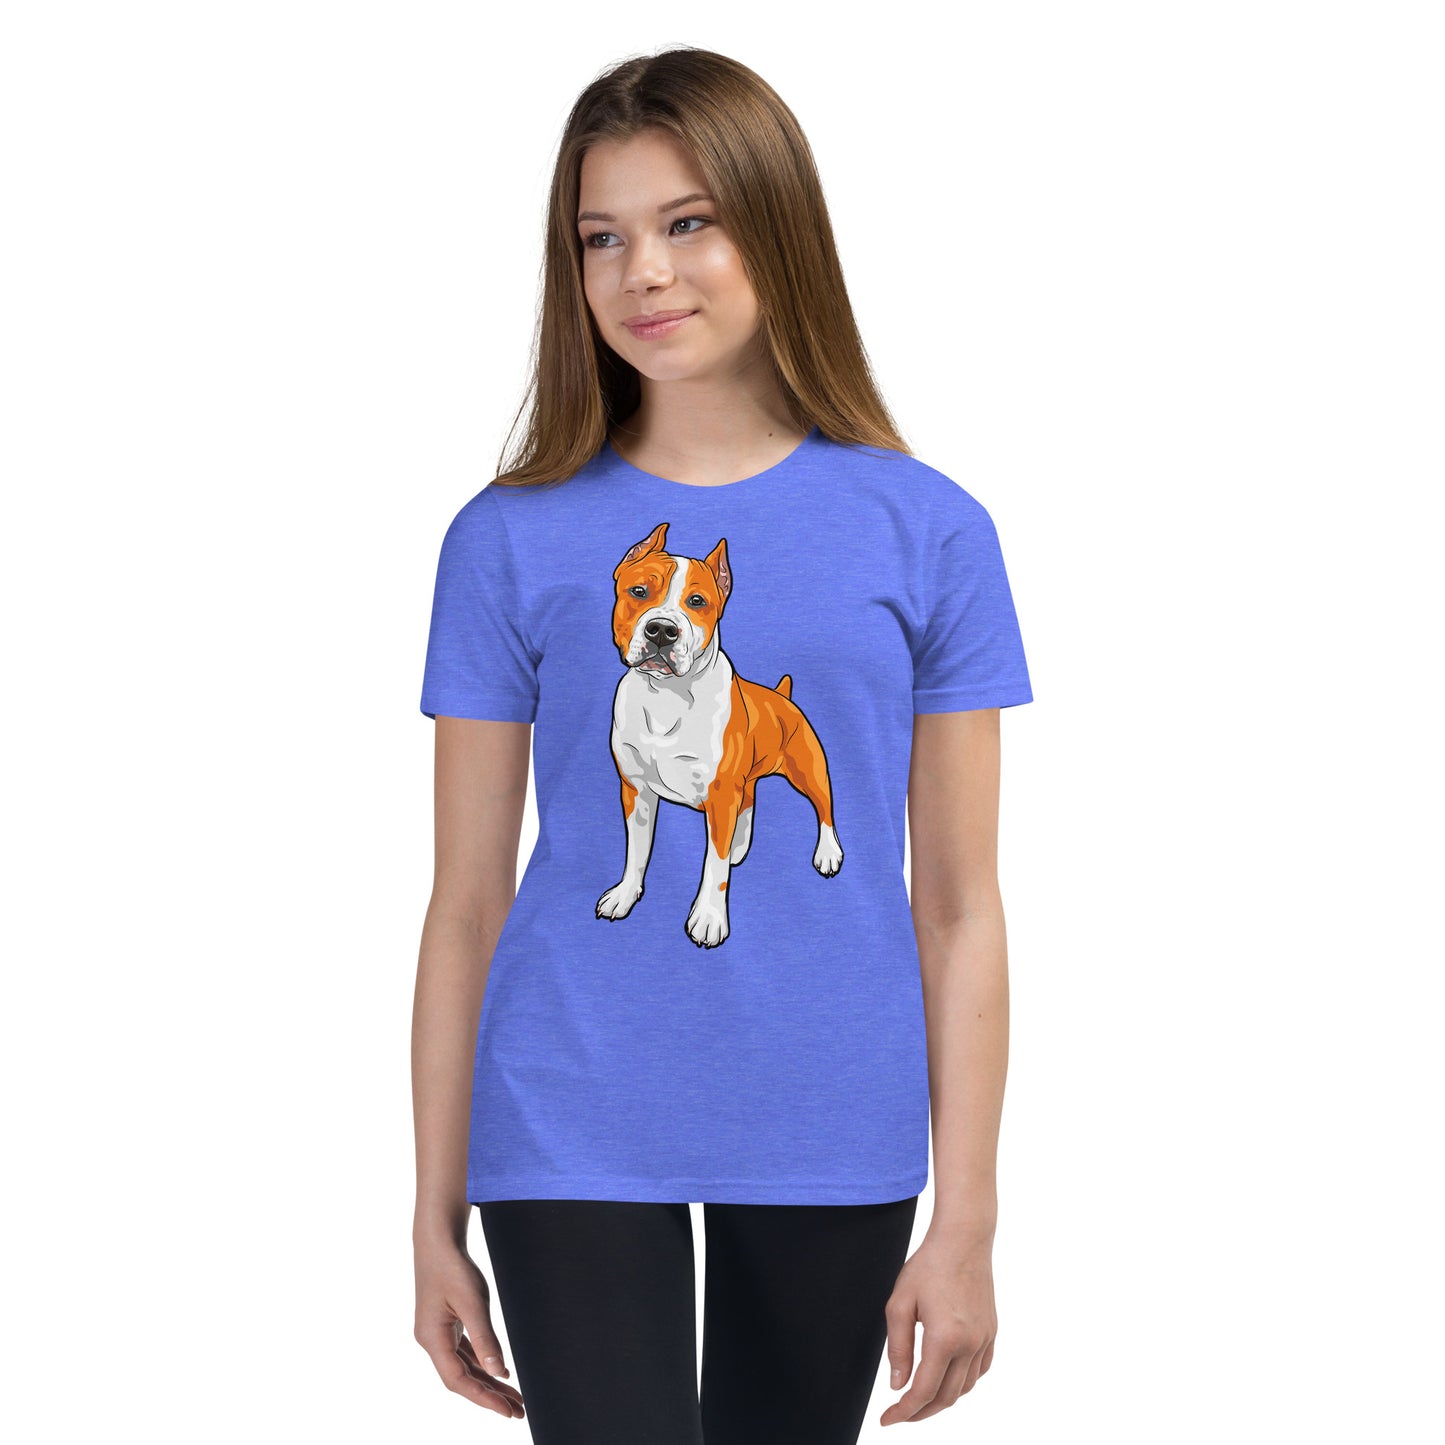 American Staffordshire Terrier T-shirt, No. 0102